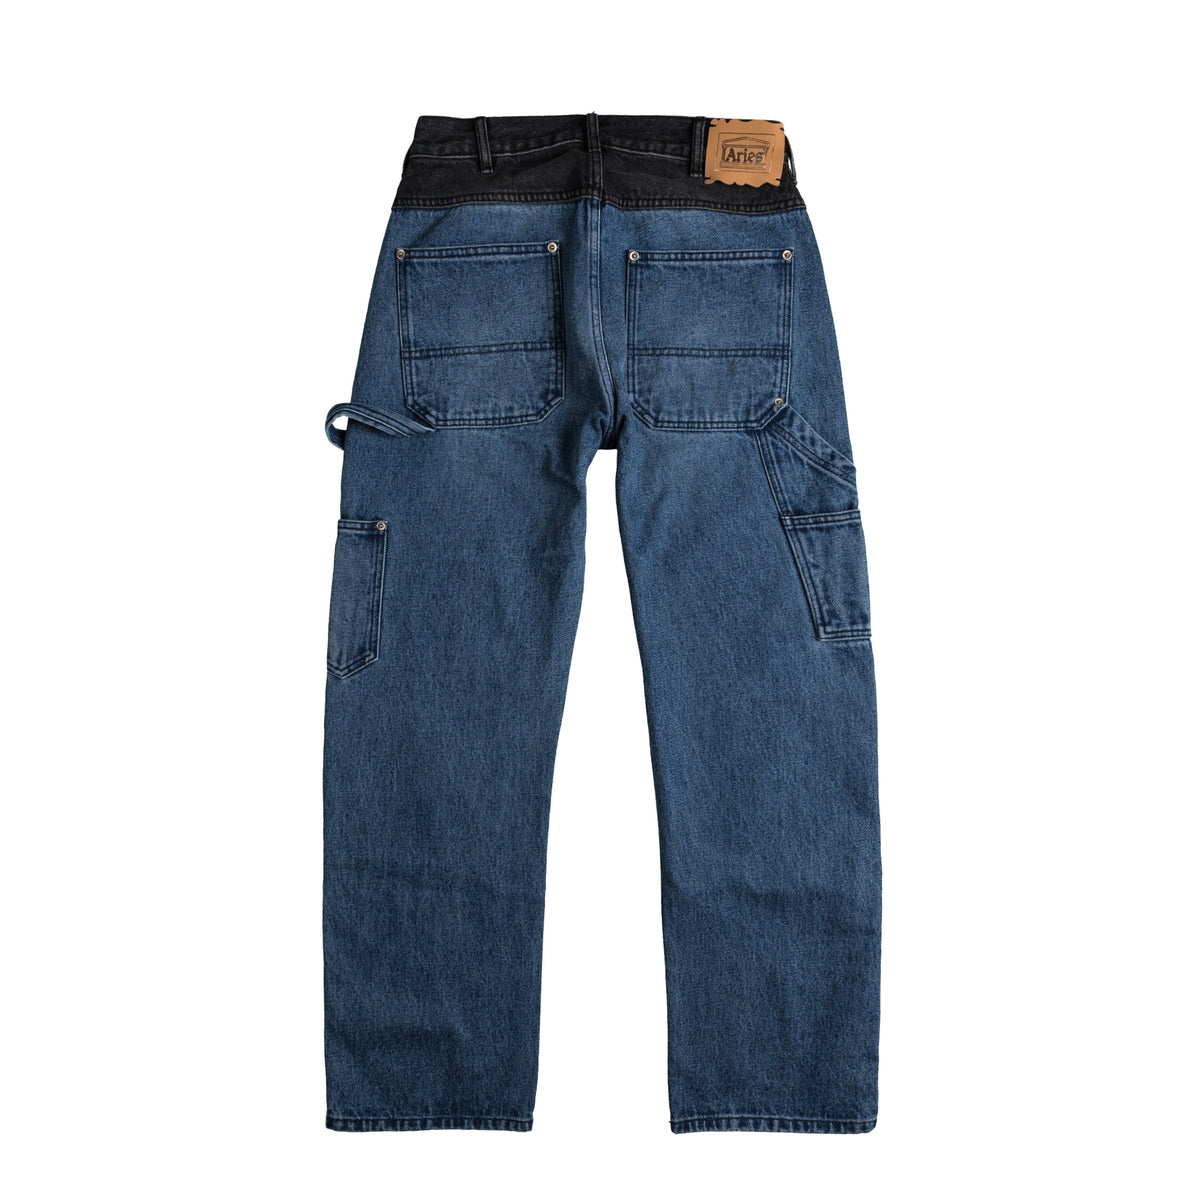 Aries Colourblocked Denim Carpenter Jeans » Buy online now!